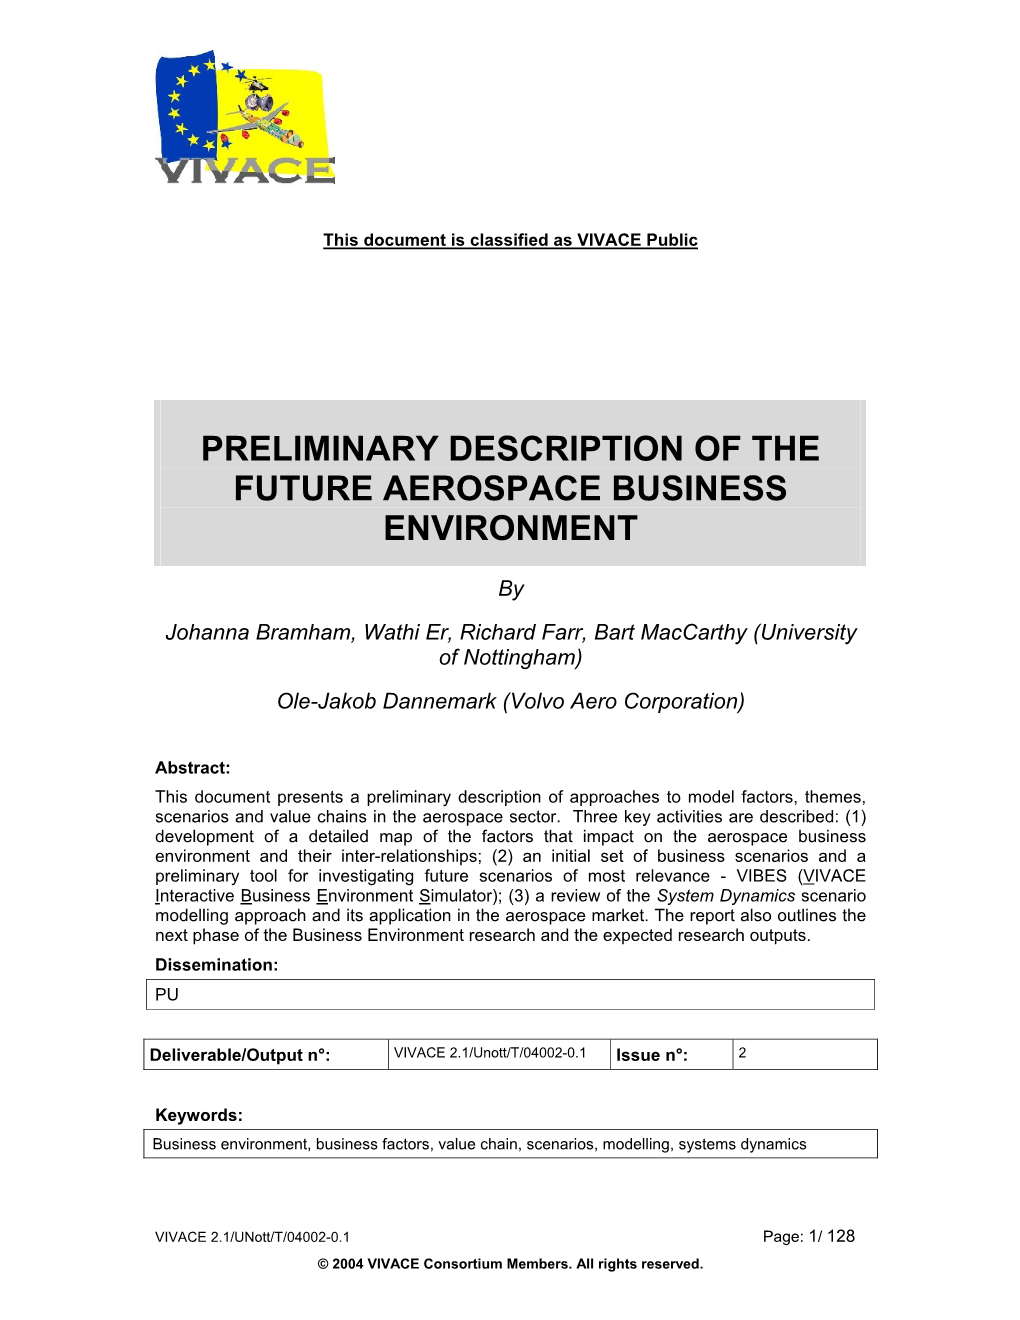 Preliminary Description of the Future Aerospace Business Environment